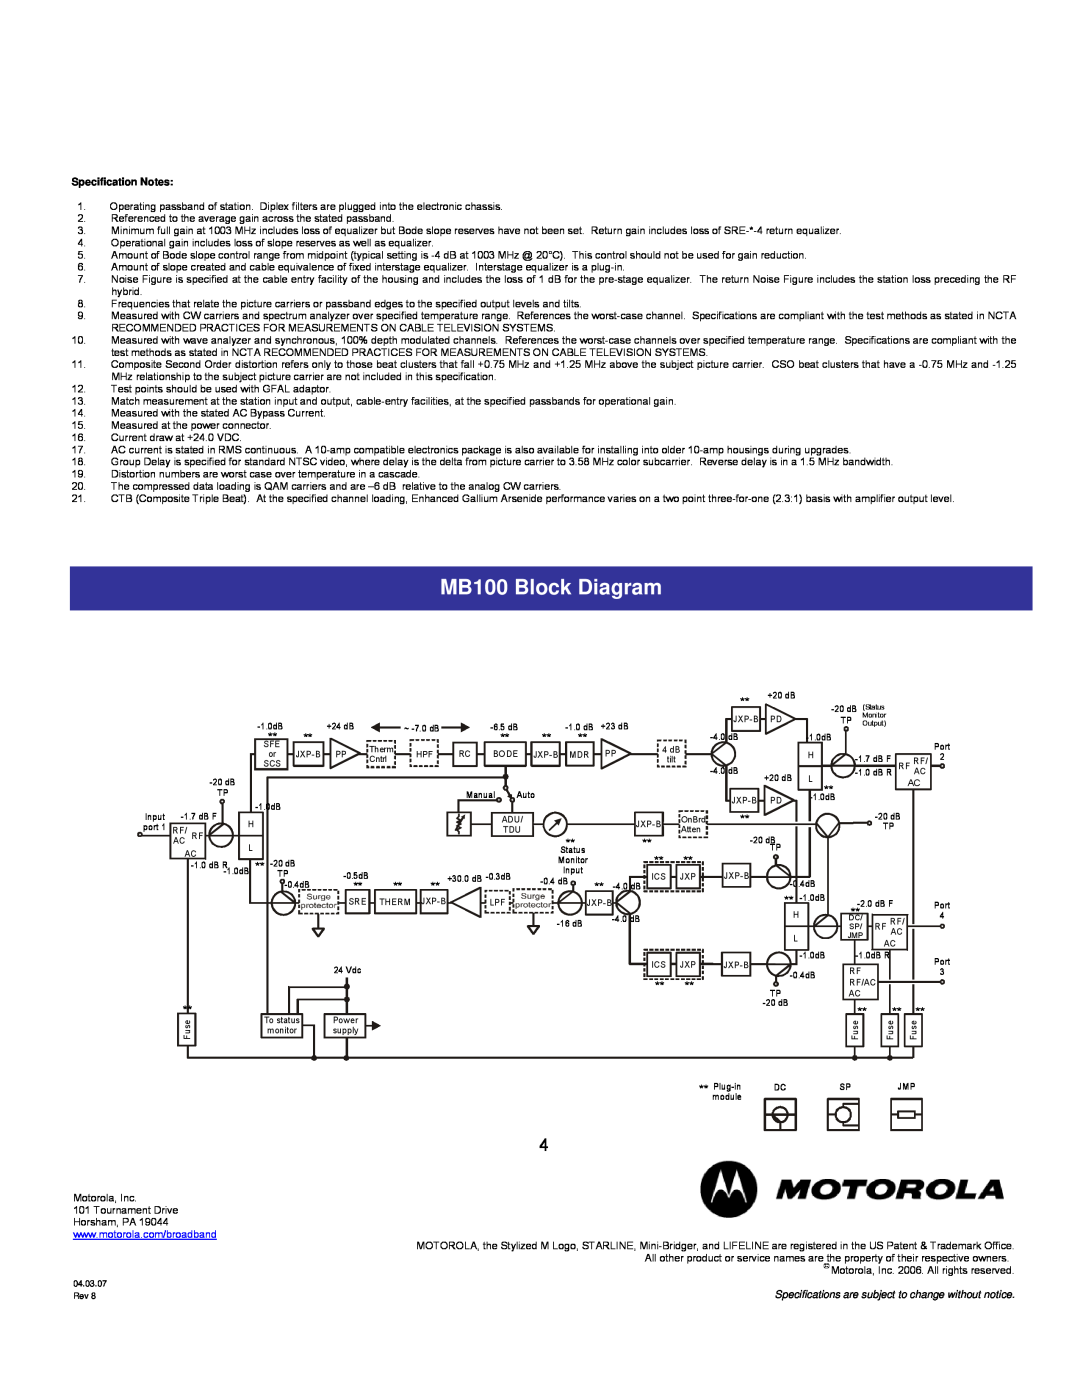 Motorola specifications MB100 Block Diagram, Specification Notes 